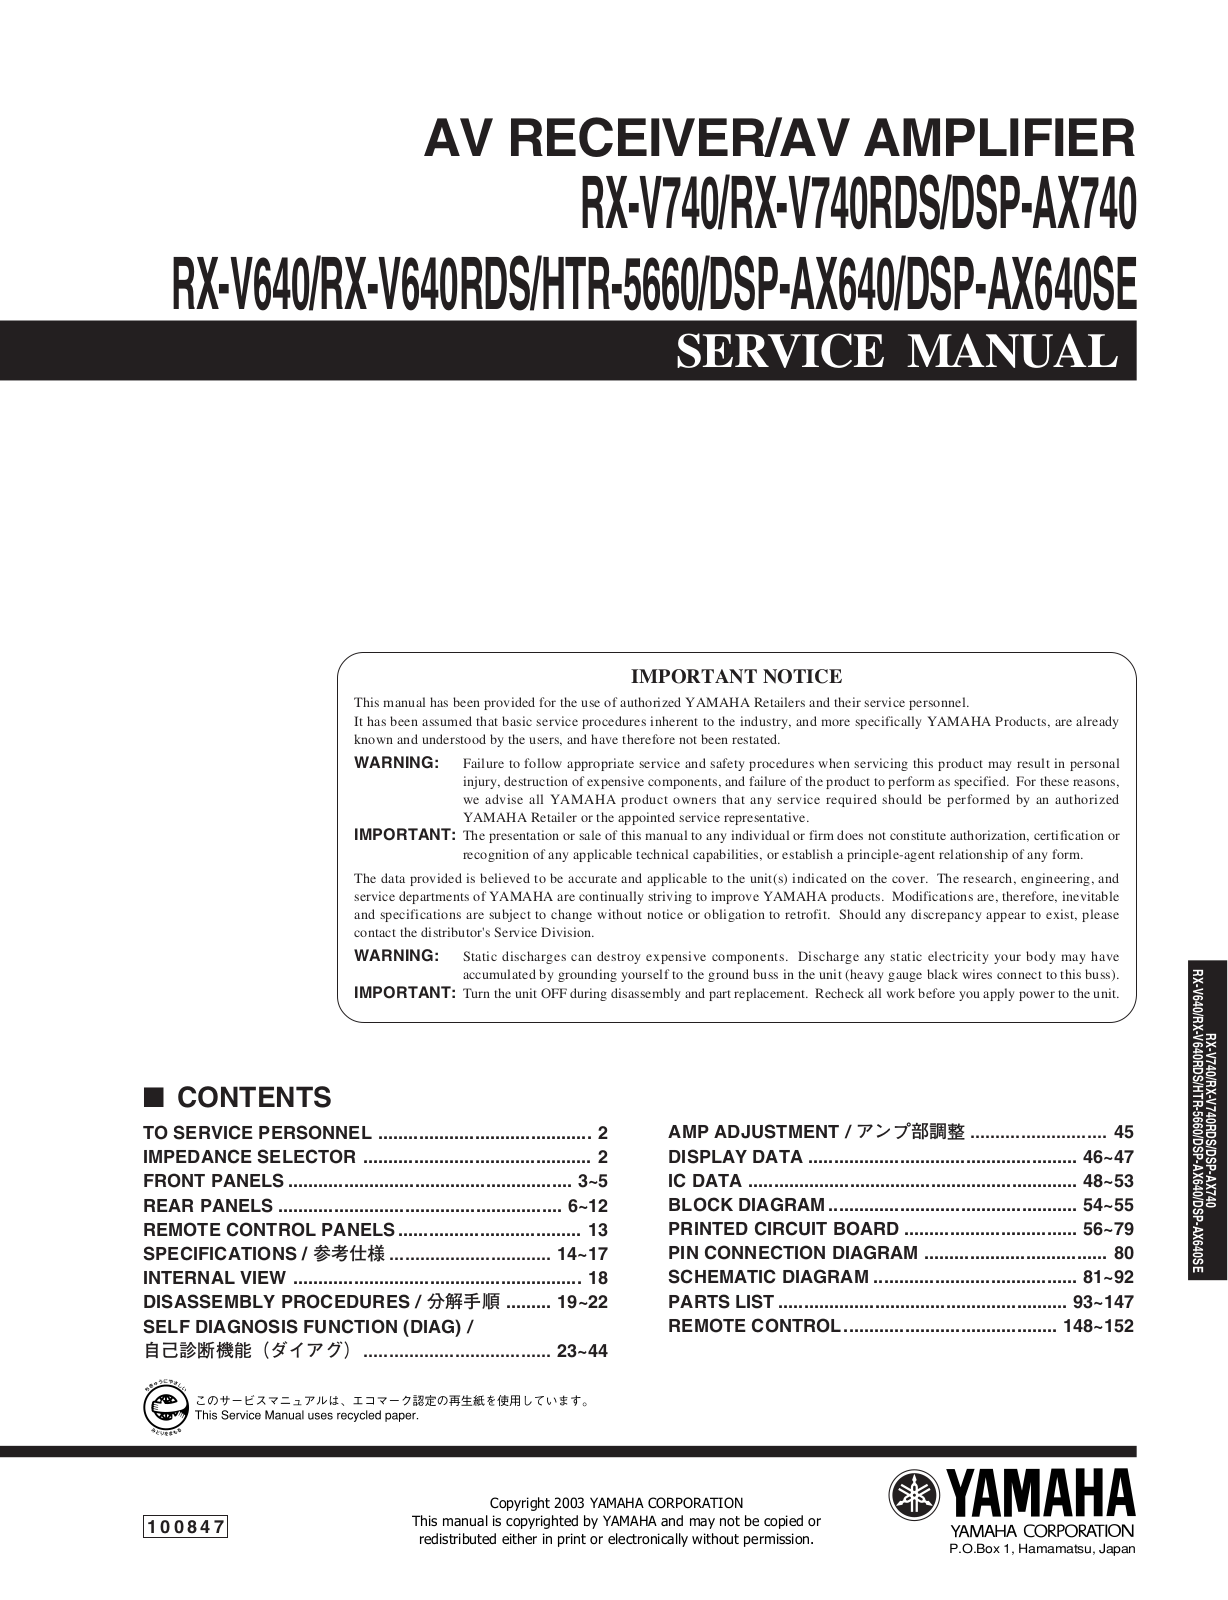 Yamaha DSPAX-640 Service manual